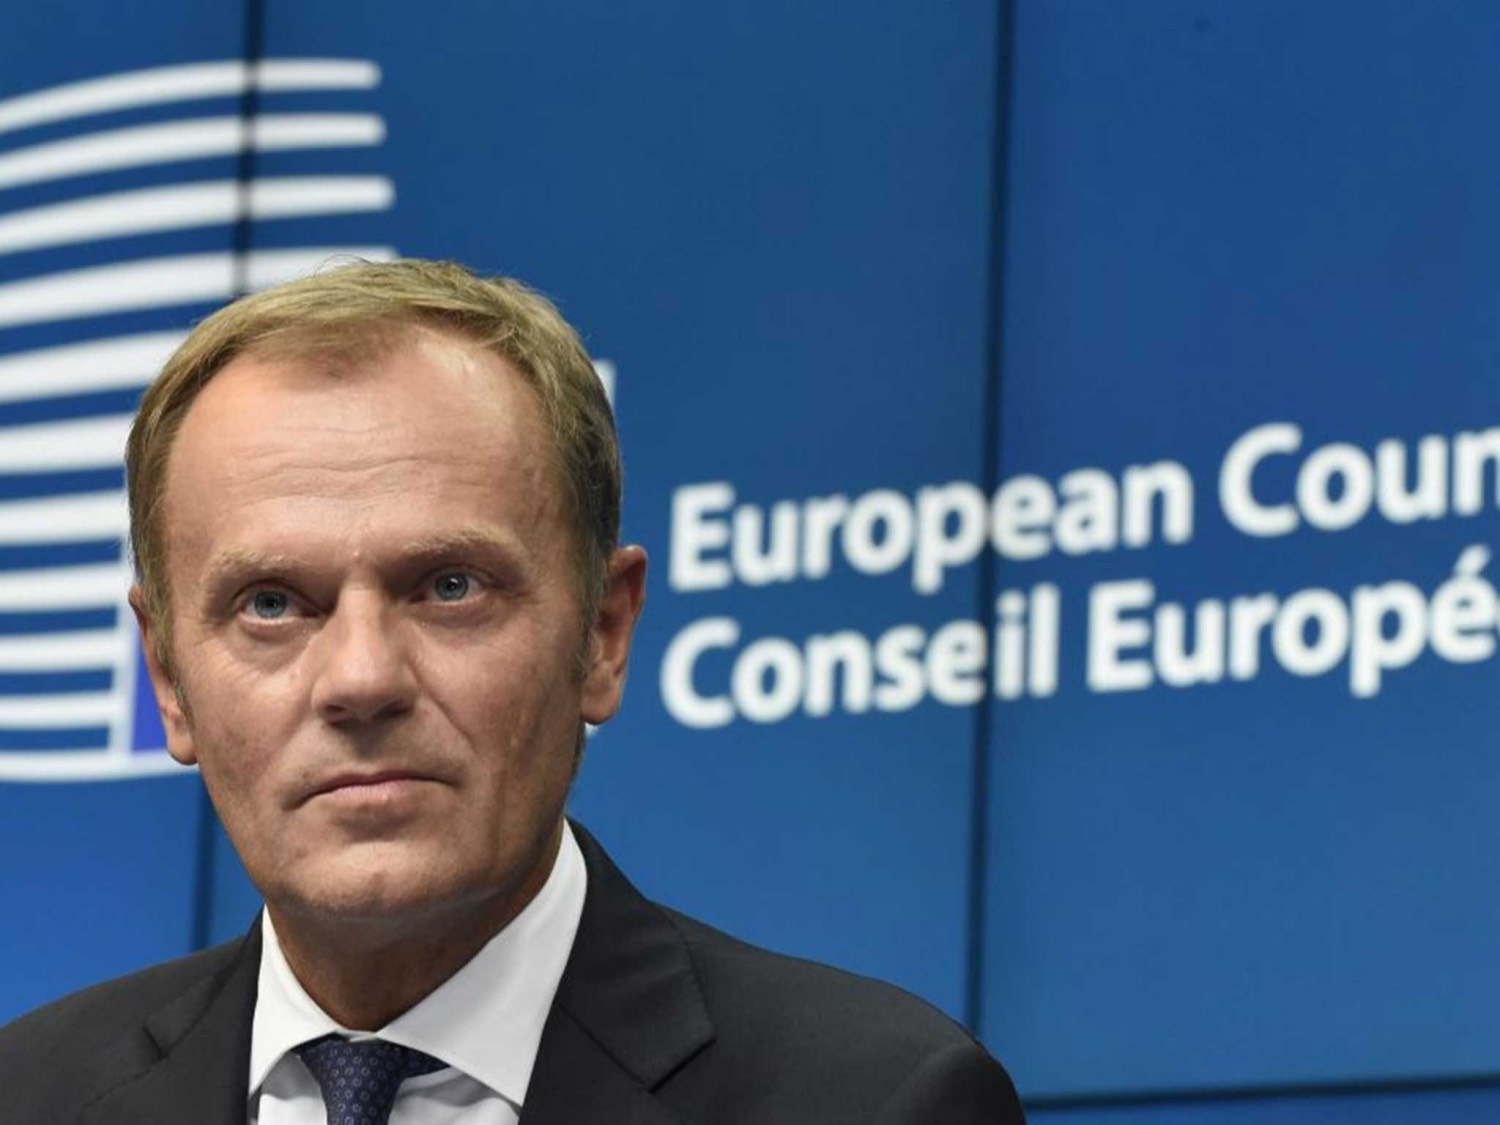 EU Donald Tusk European Council Union Chair